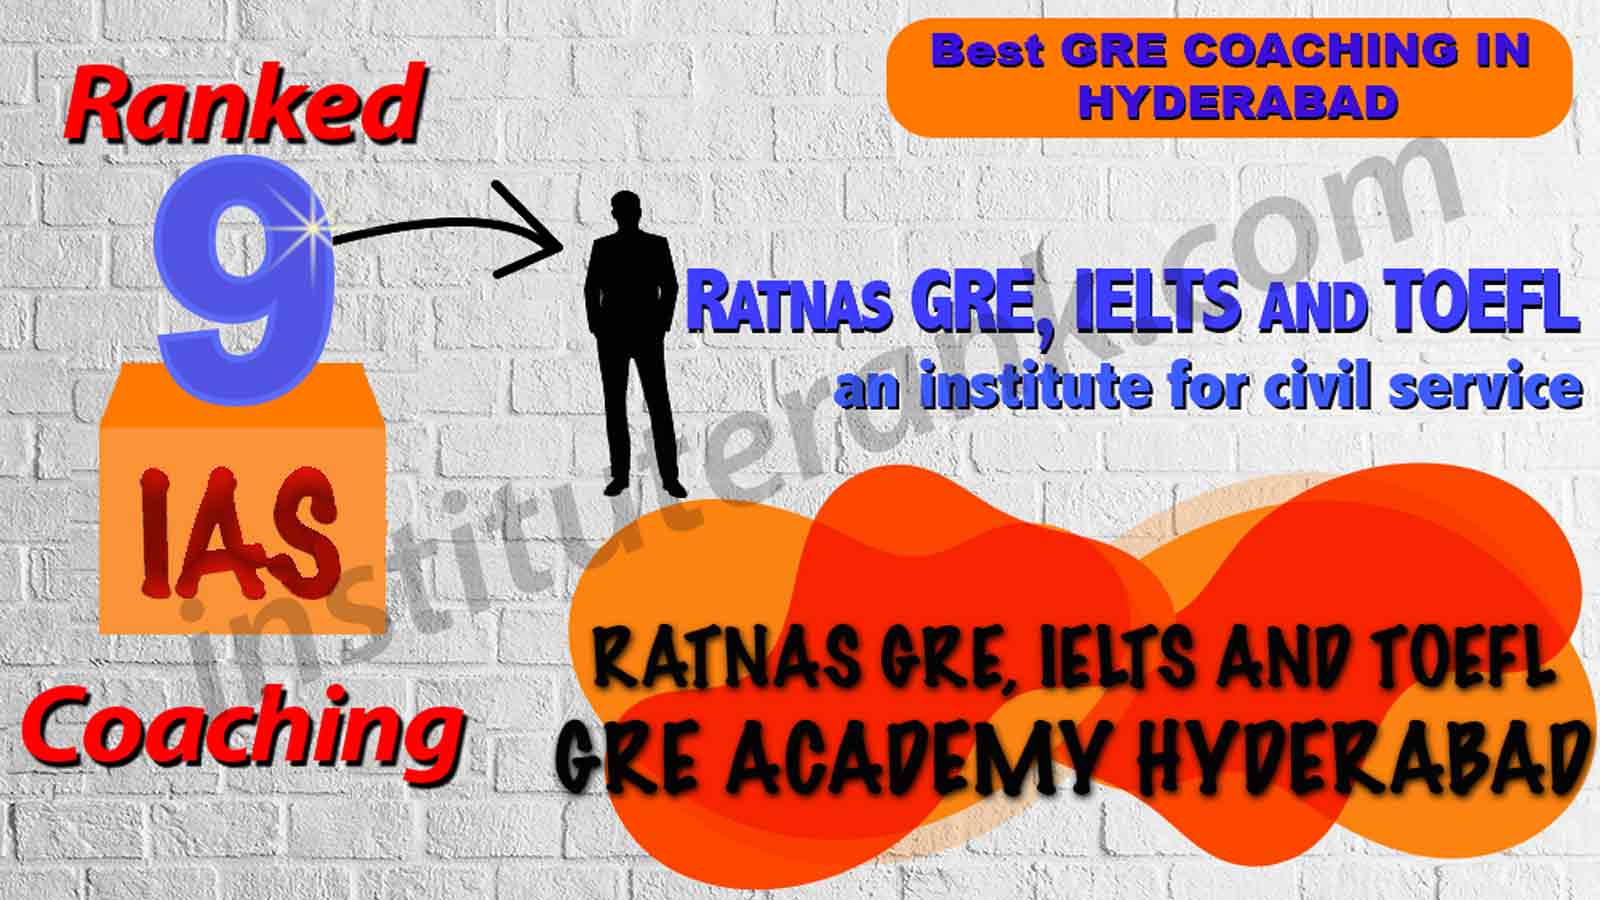 Best GRE Coaching in Hyderabad